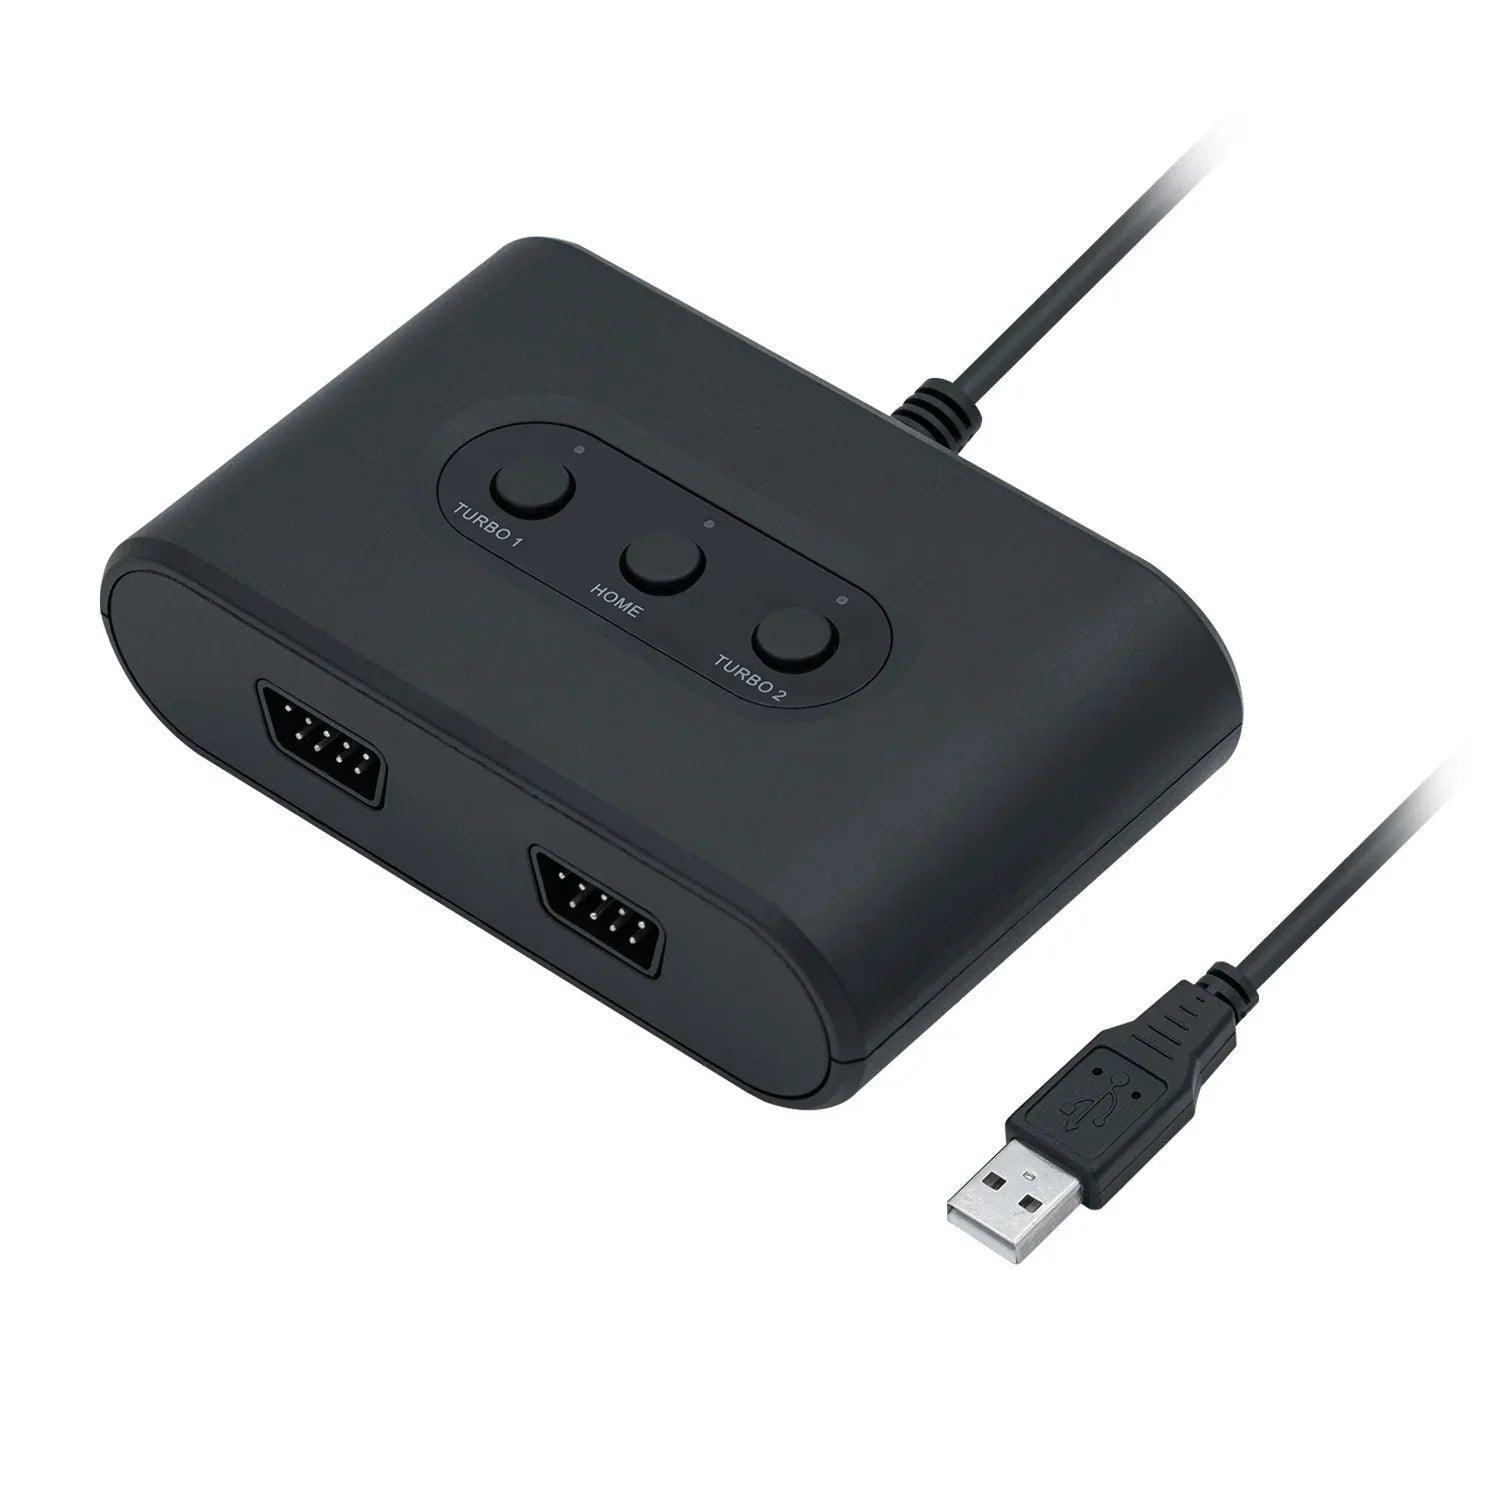 Sega Mega Drive / Genesis Kontroller Adapter for Nintendo Switch/PC - RetroGaming.no